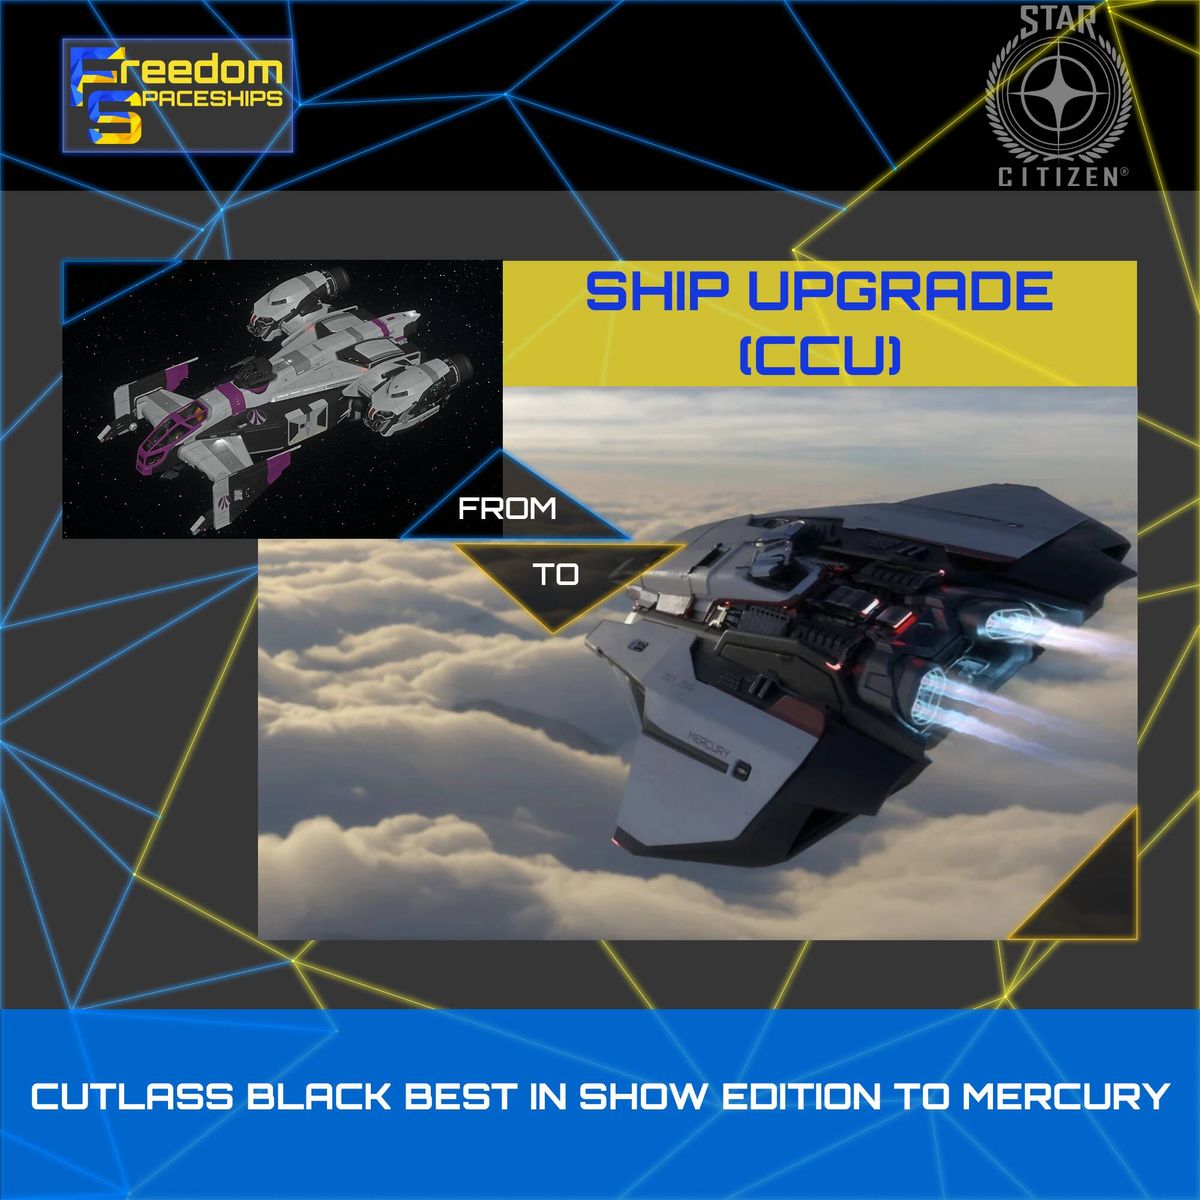 Upgrade - Cutlass Black Best In Show Edition to Mercury